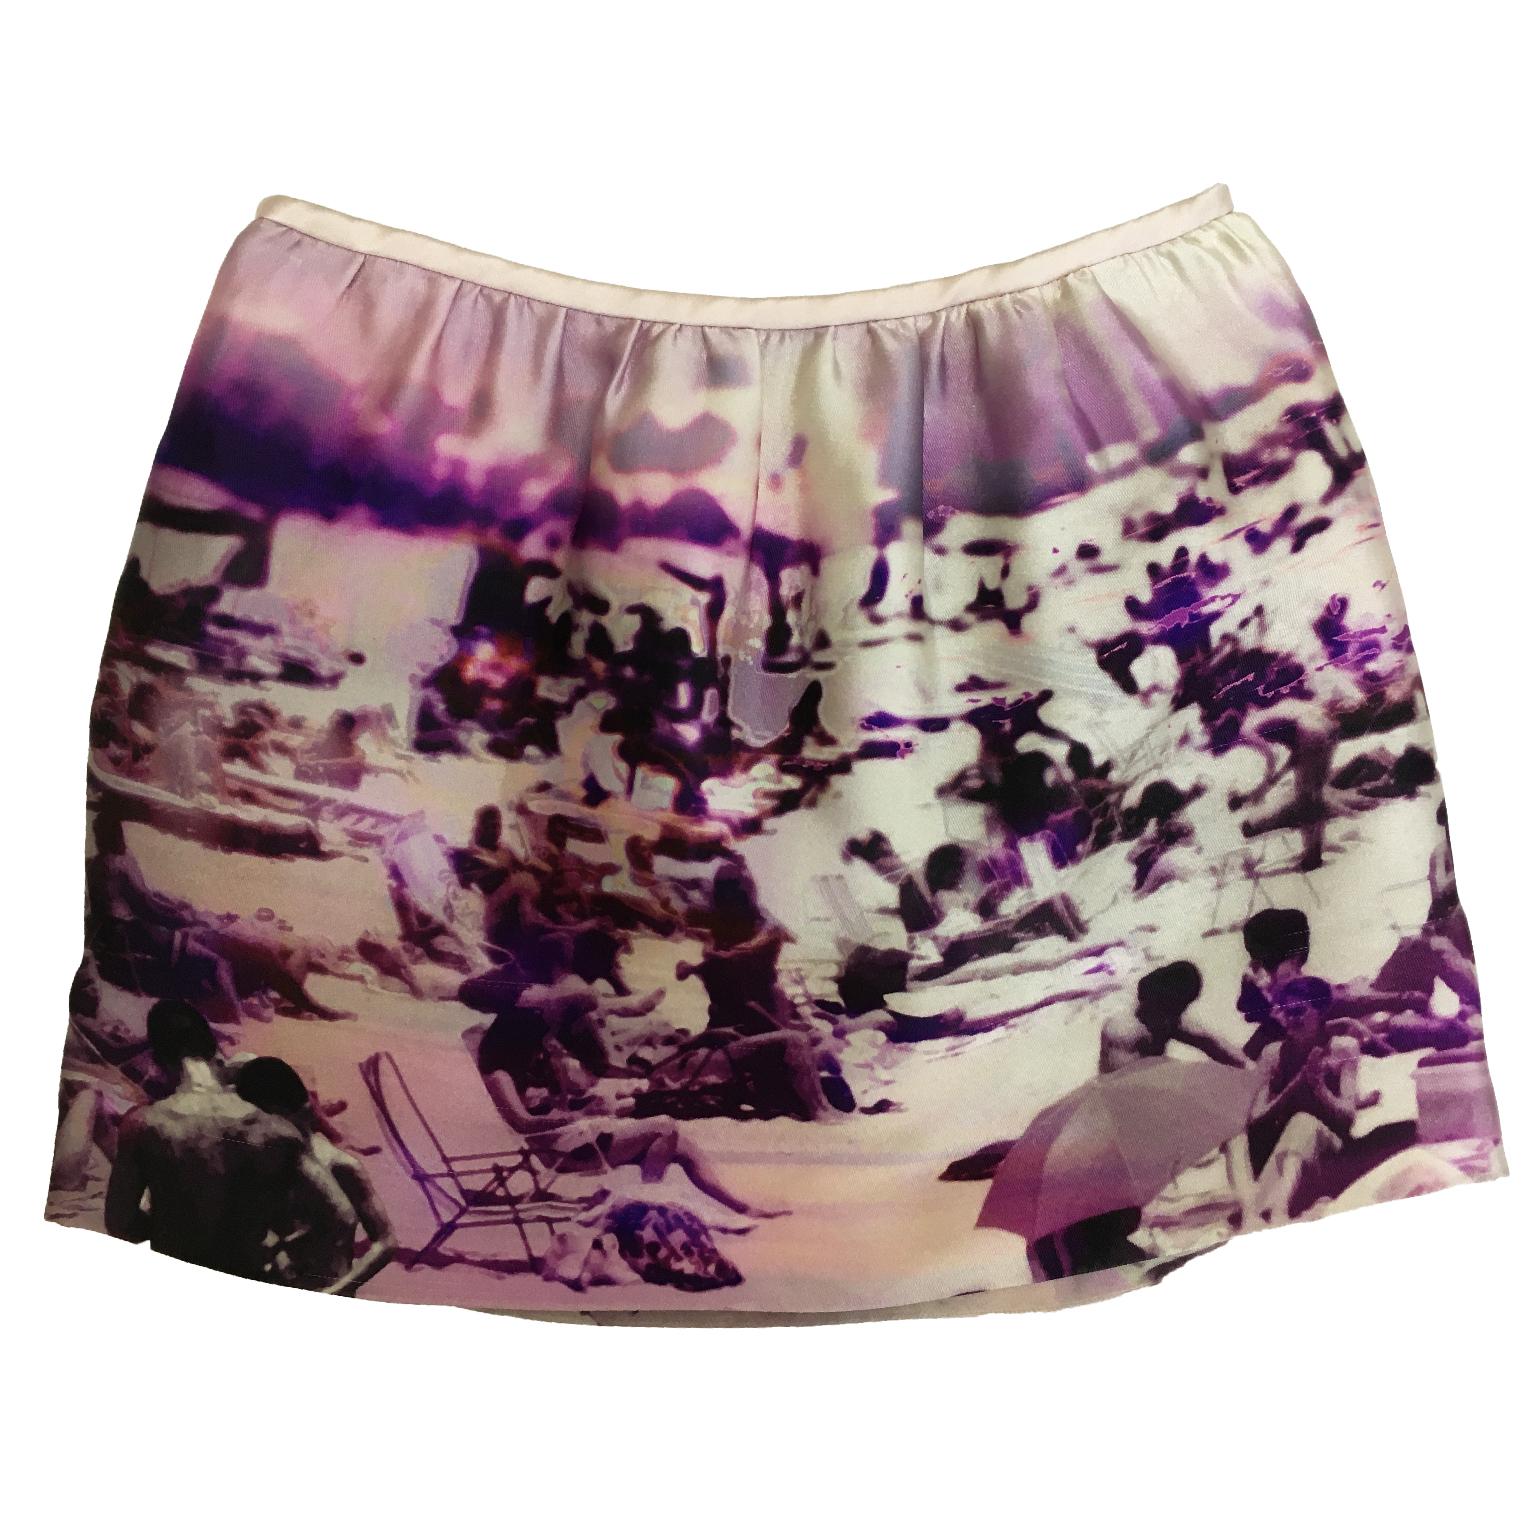 Prada beach tropical print show piece skirt ss 2010 collection. 
Side zip opening, silk 69% polyester 31%
Size : 38
Waist : 69 cm
Length : 36 cm
